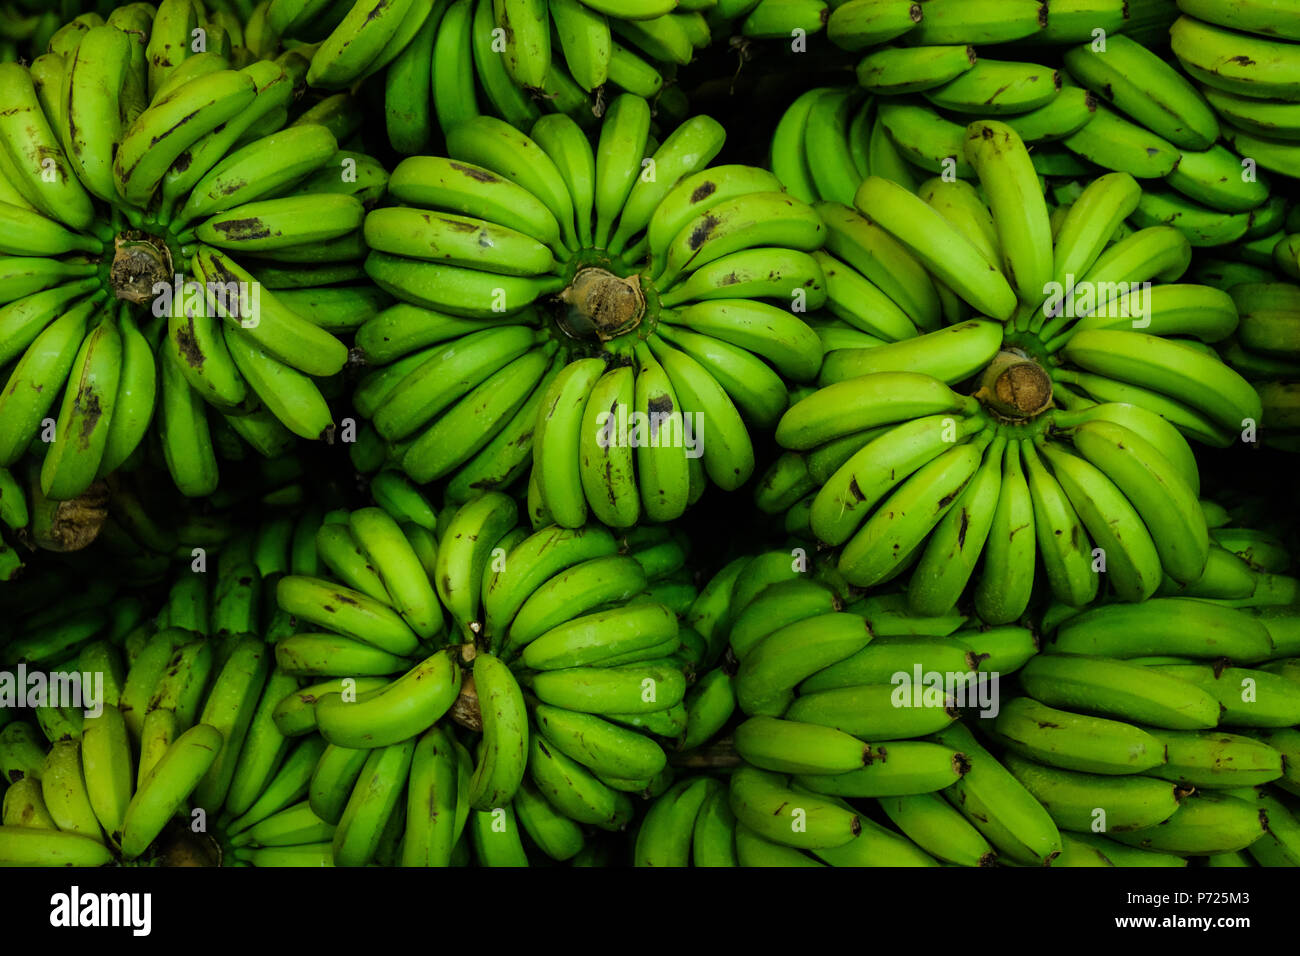 Big mûres bananes vertes et jaunes sur market stall Banque D'Images